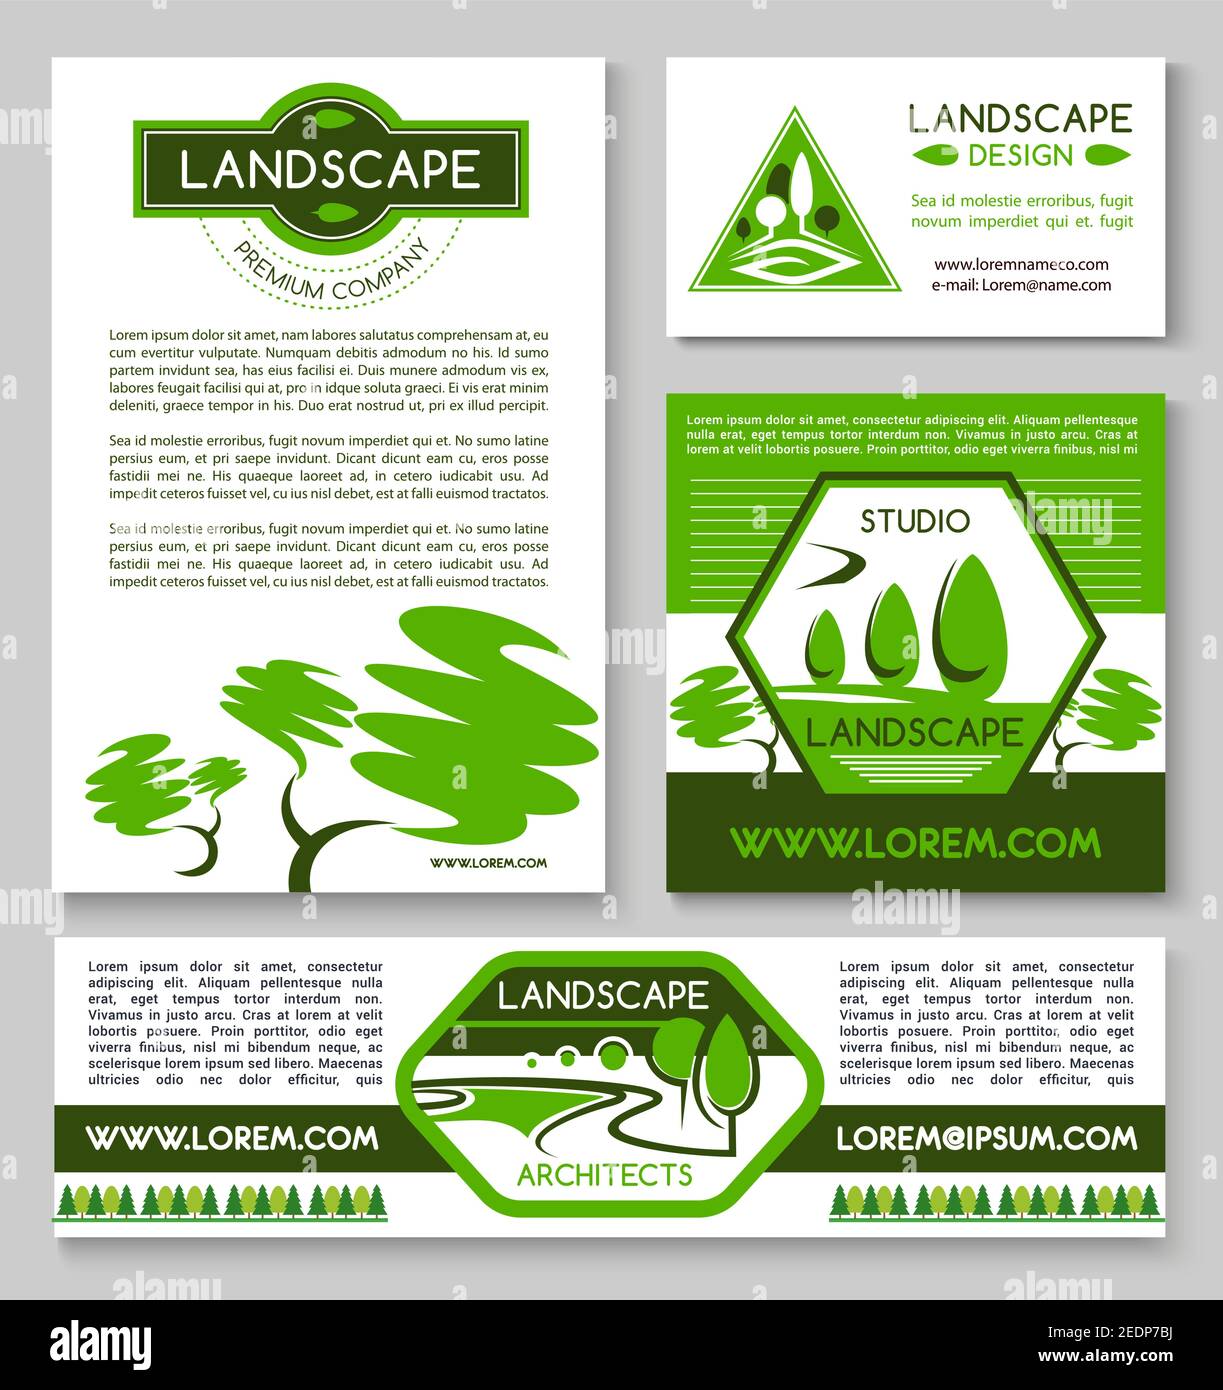 Landscape design business banner template set. Landscape architect Intended For Landscaping Business Card Template